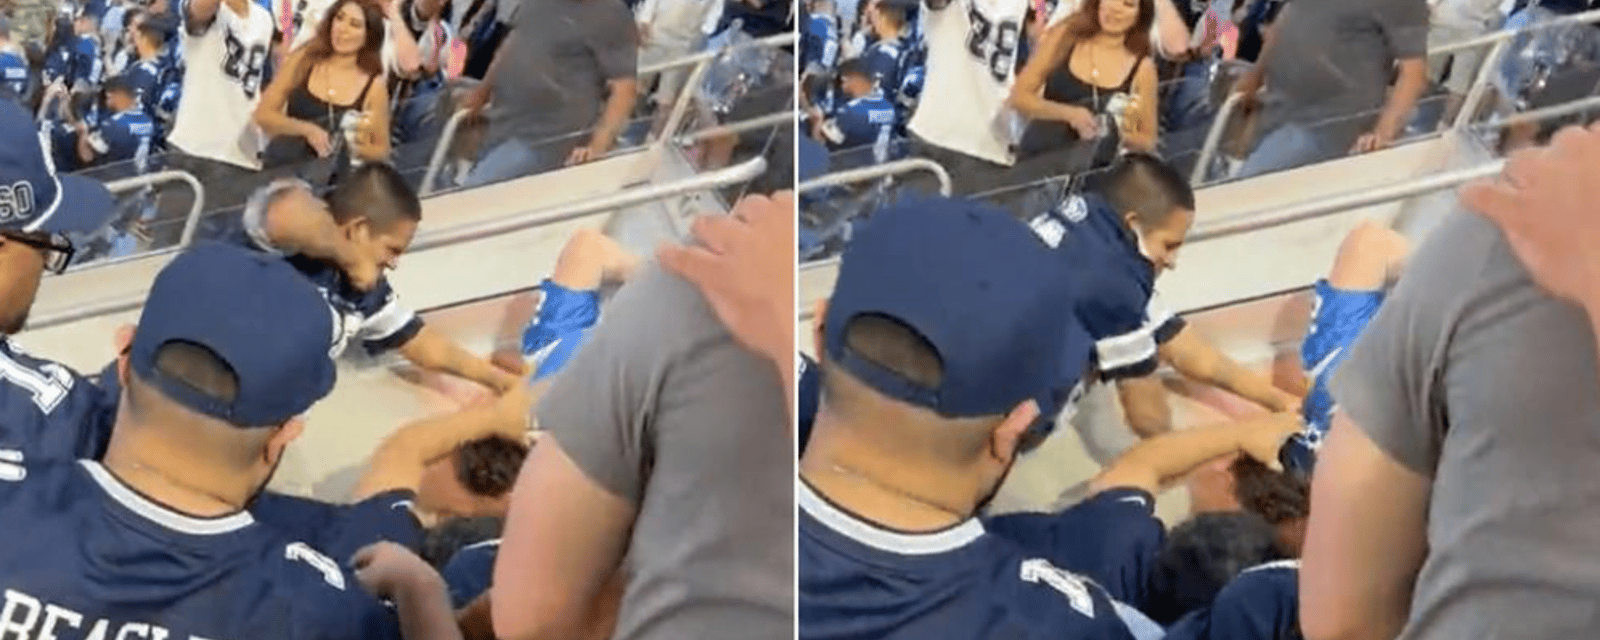 Chargers fan's face brutalized by Cowboys fan 